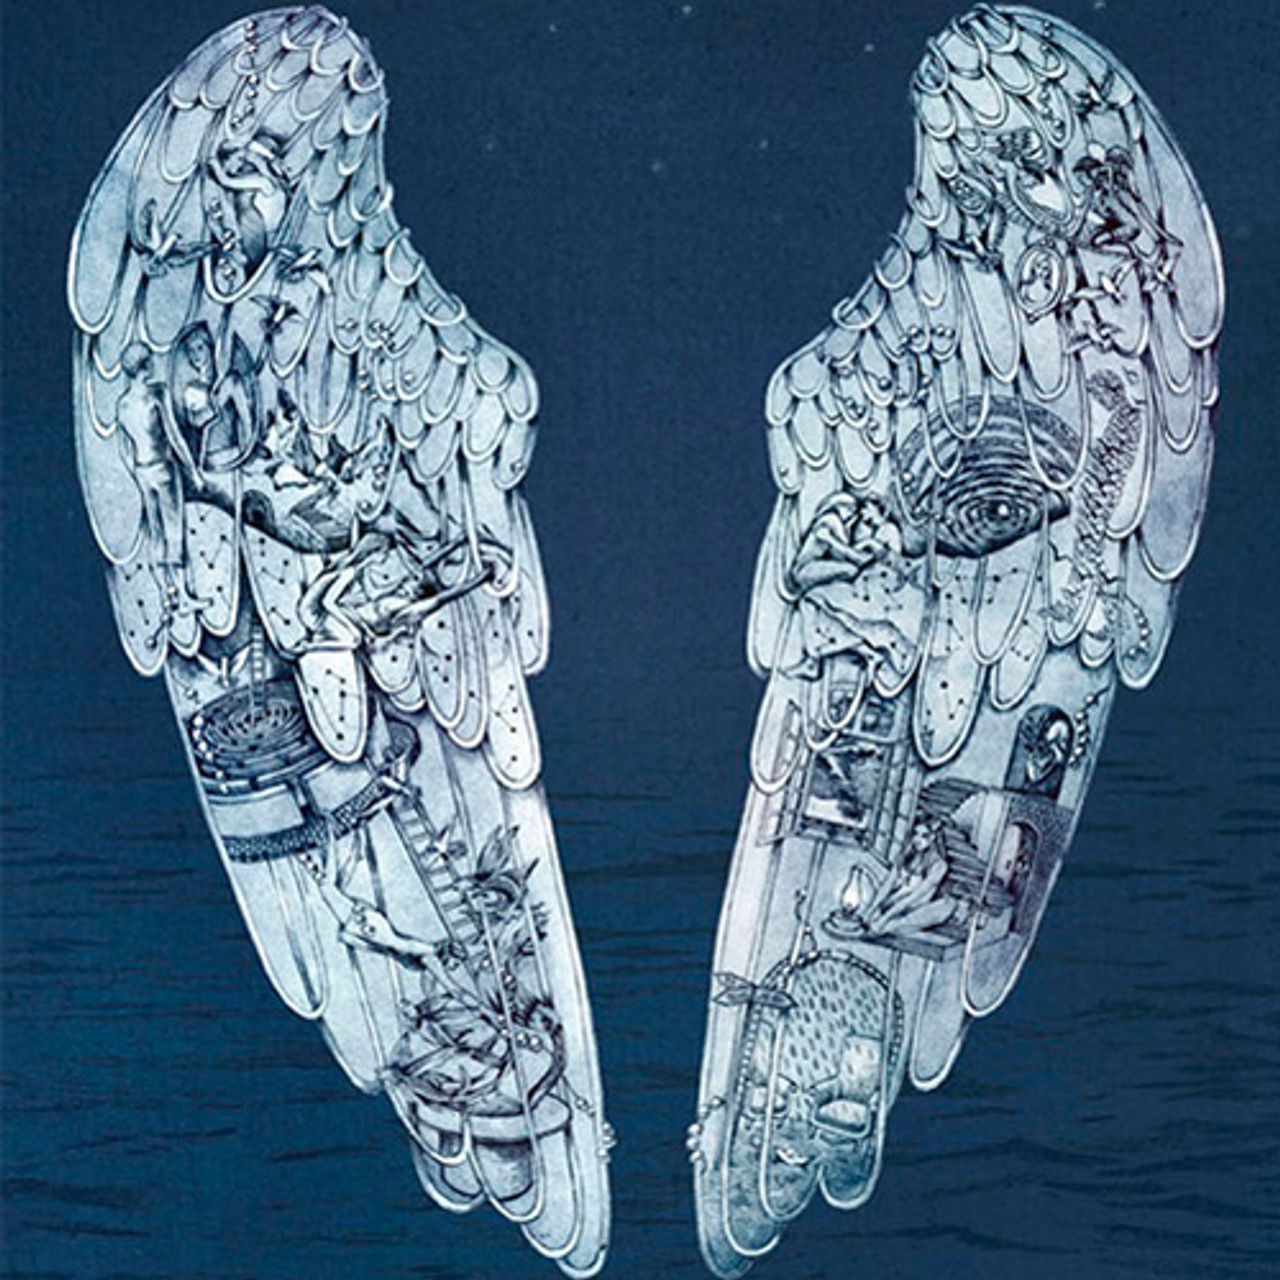 Coldplay Ghost Stories 180g LP